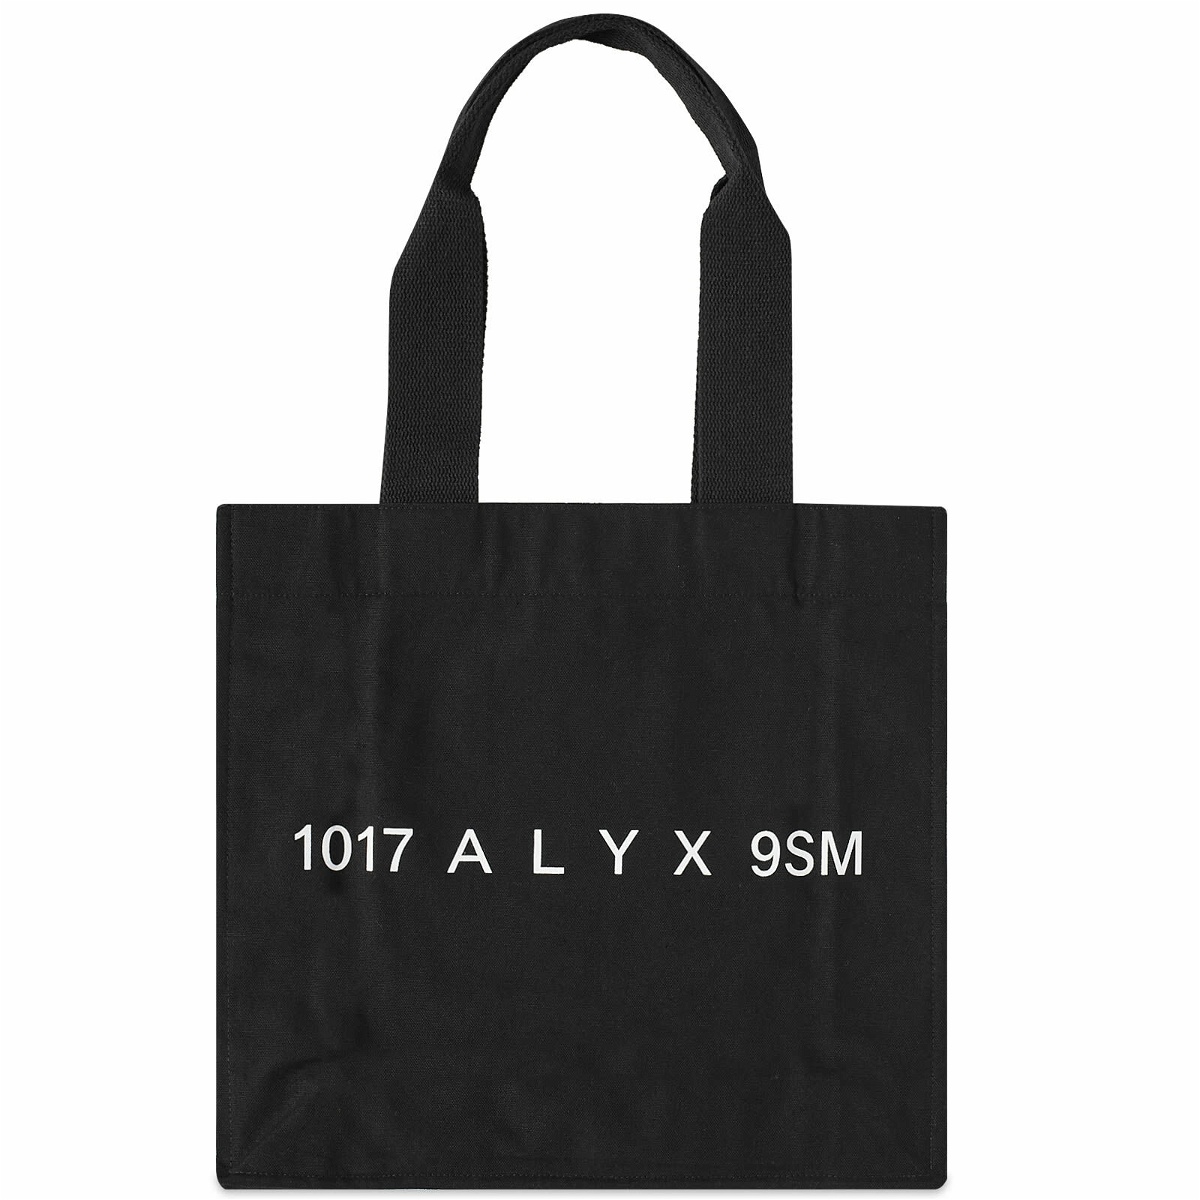 1017 ALYX 9SM Men's Collection Tote in Black 1017 ALYX 9SM